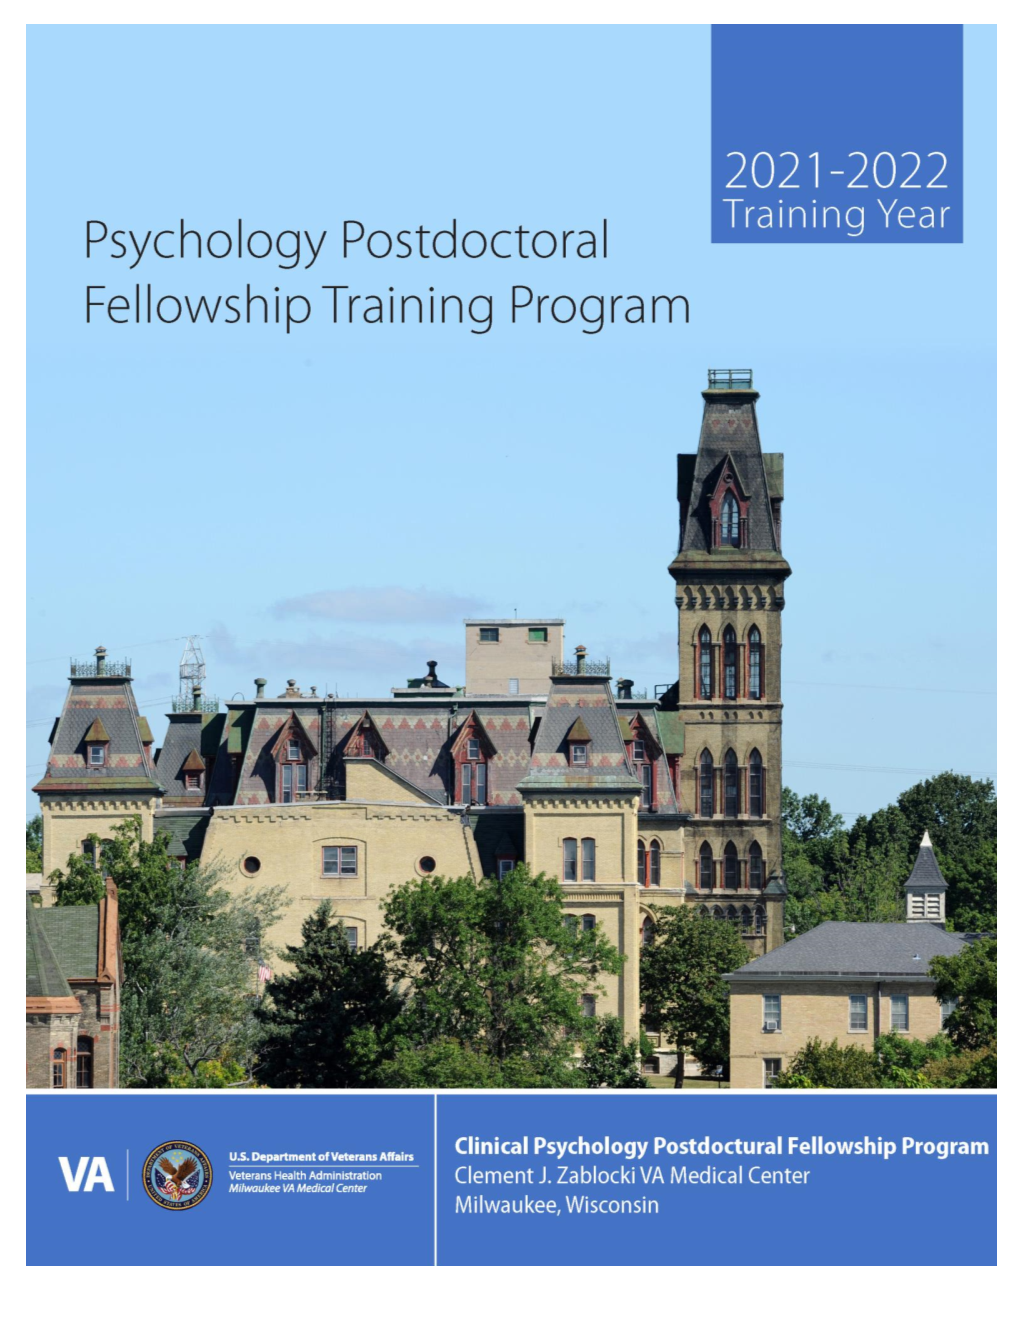 Psychology Postdoctoral Fellowship Training Program Brochure